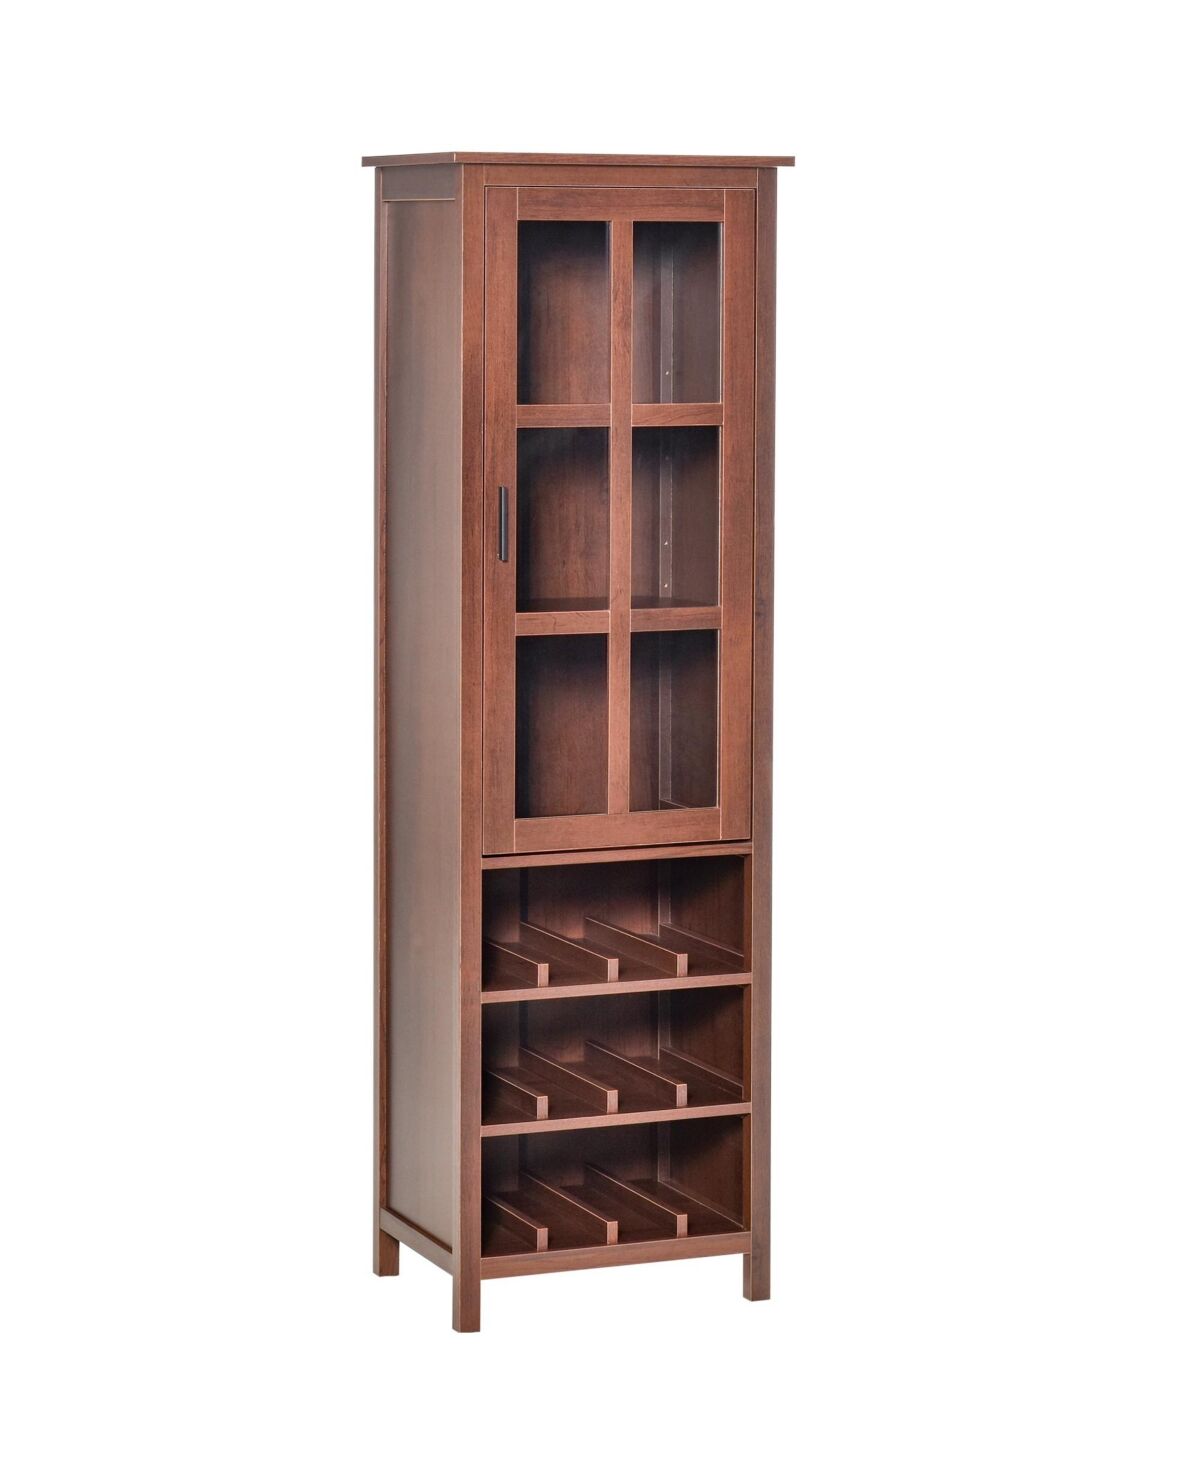 Homcom Wine Cabinet Bar Display Cupboard w/ Glass Door and 3 Cubbies, Walnut - Natural